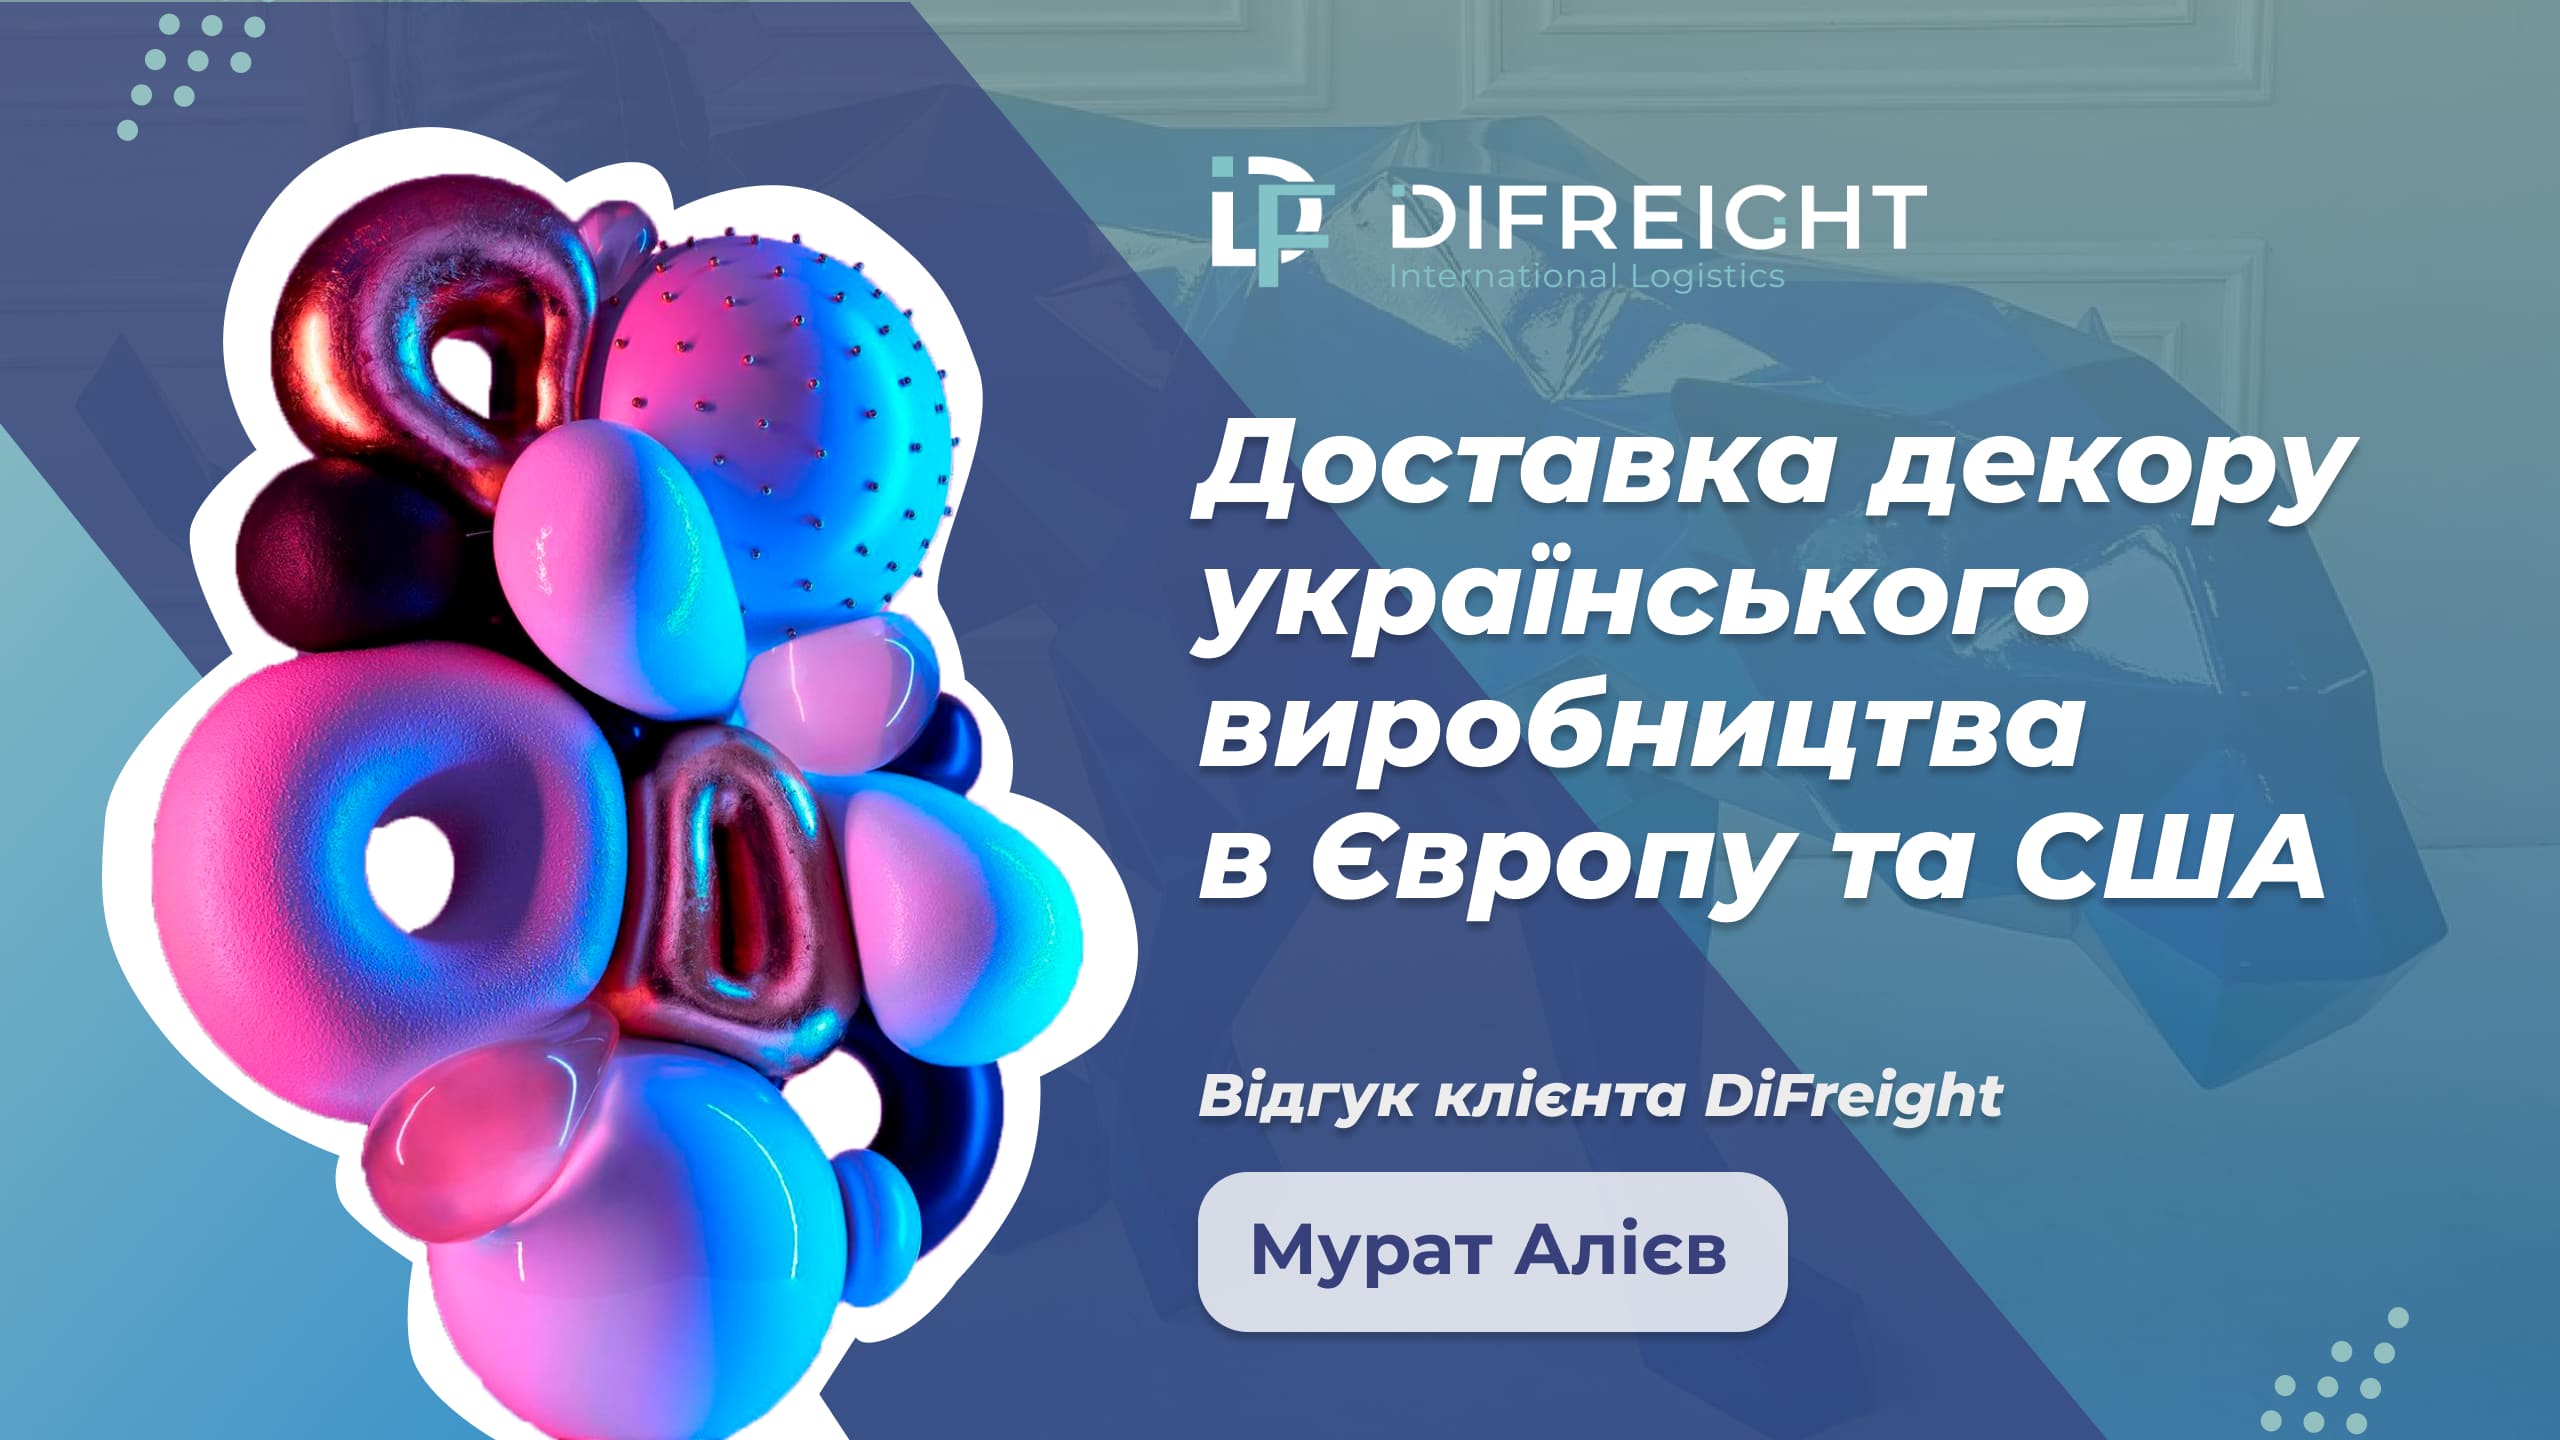 Доставка декора украинского производства в Европу и США / Отзыв клиента DiFreight Мурад Алиев.